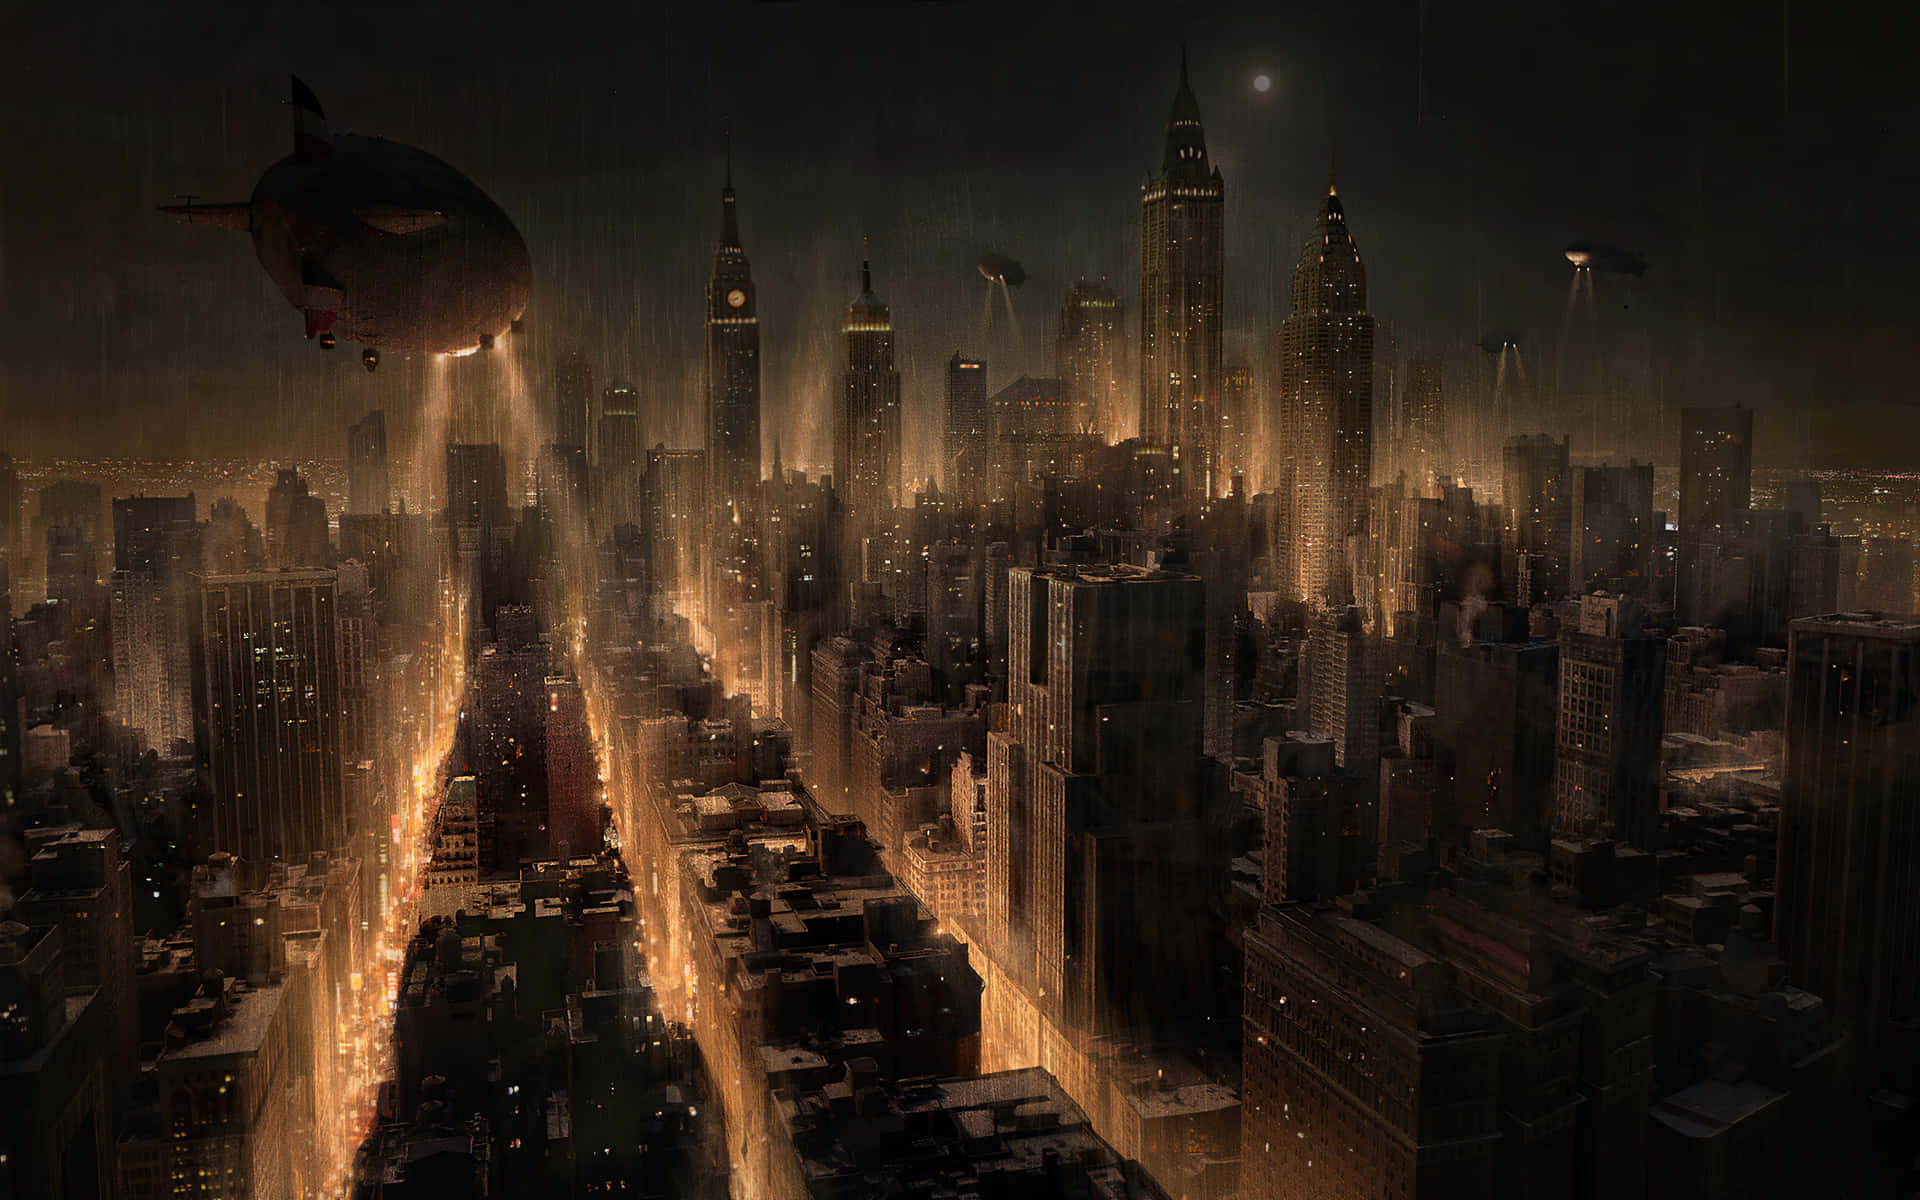 Enter the City of Gotham. Wallpaper